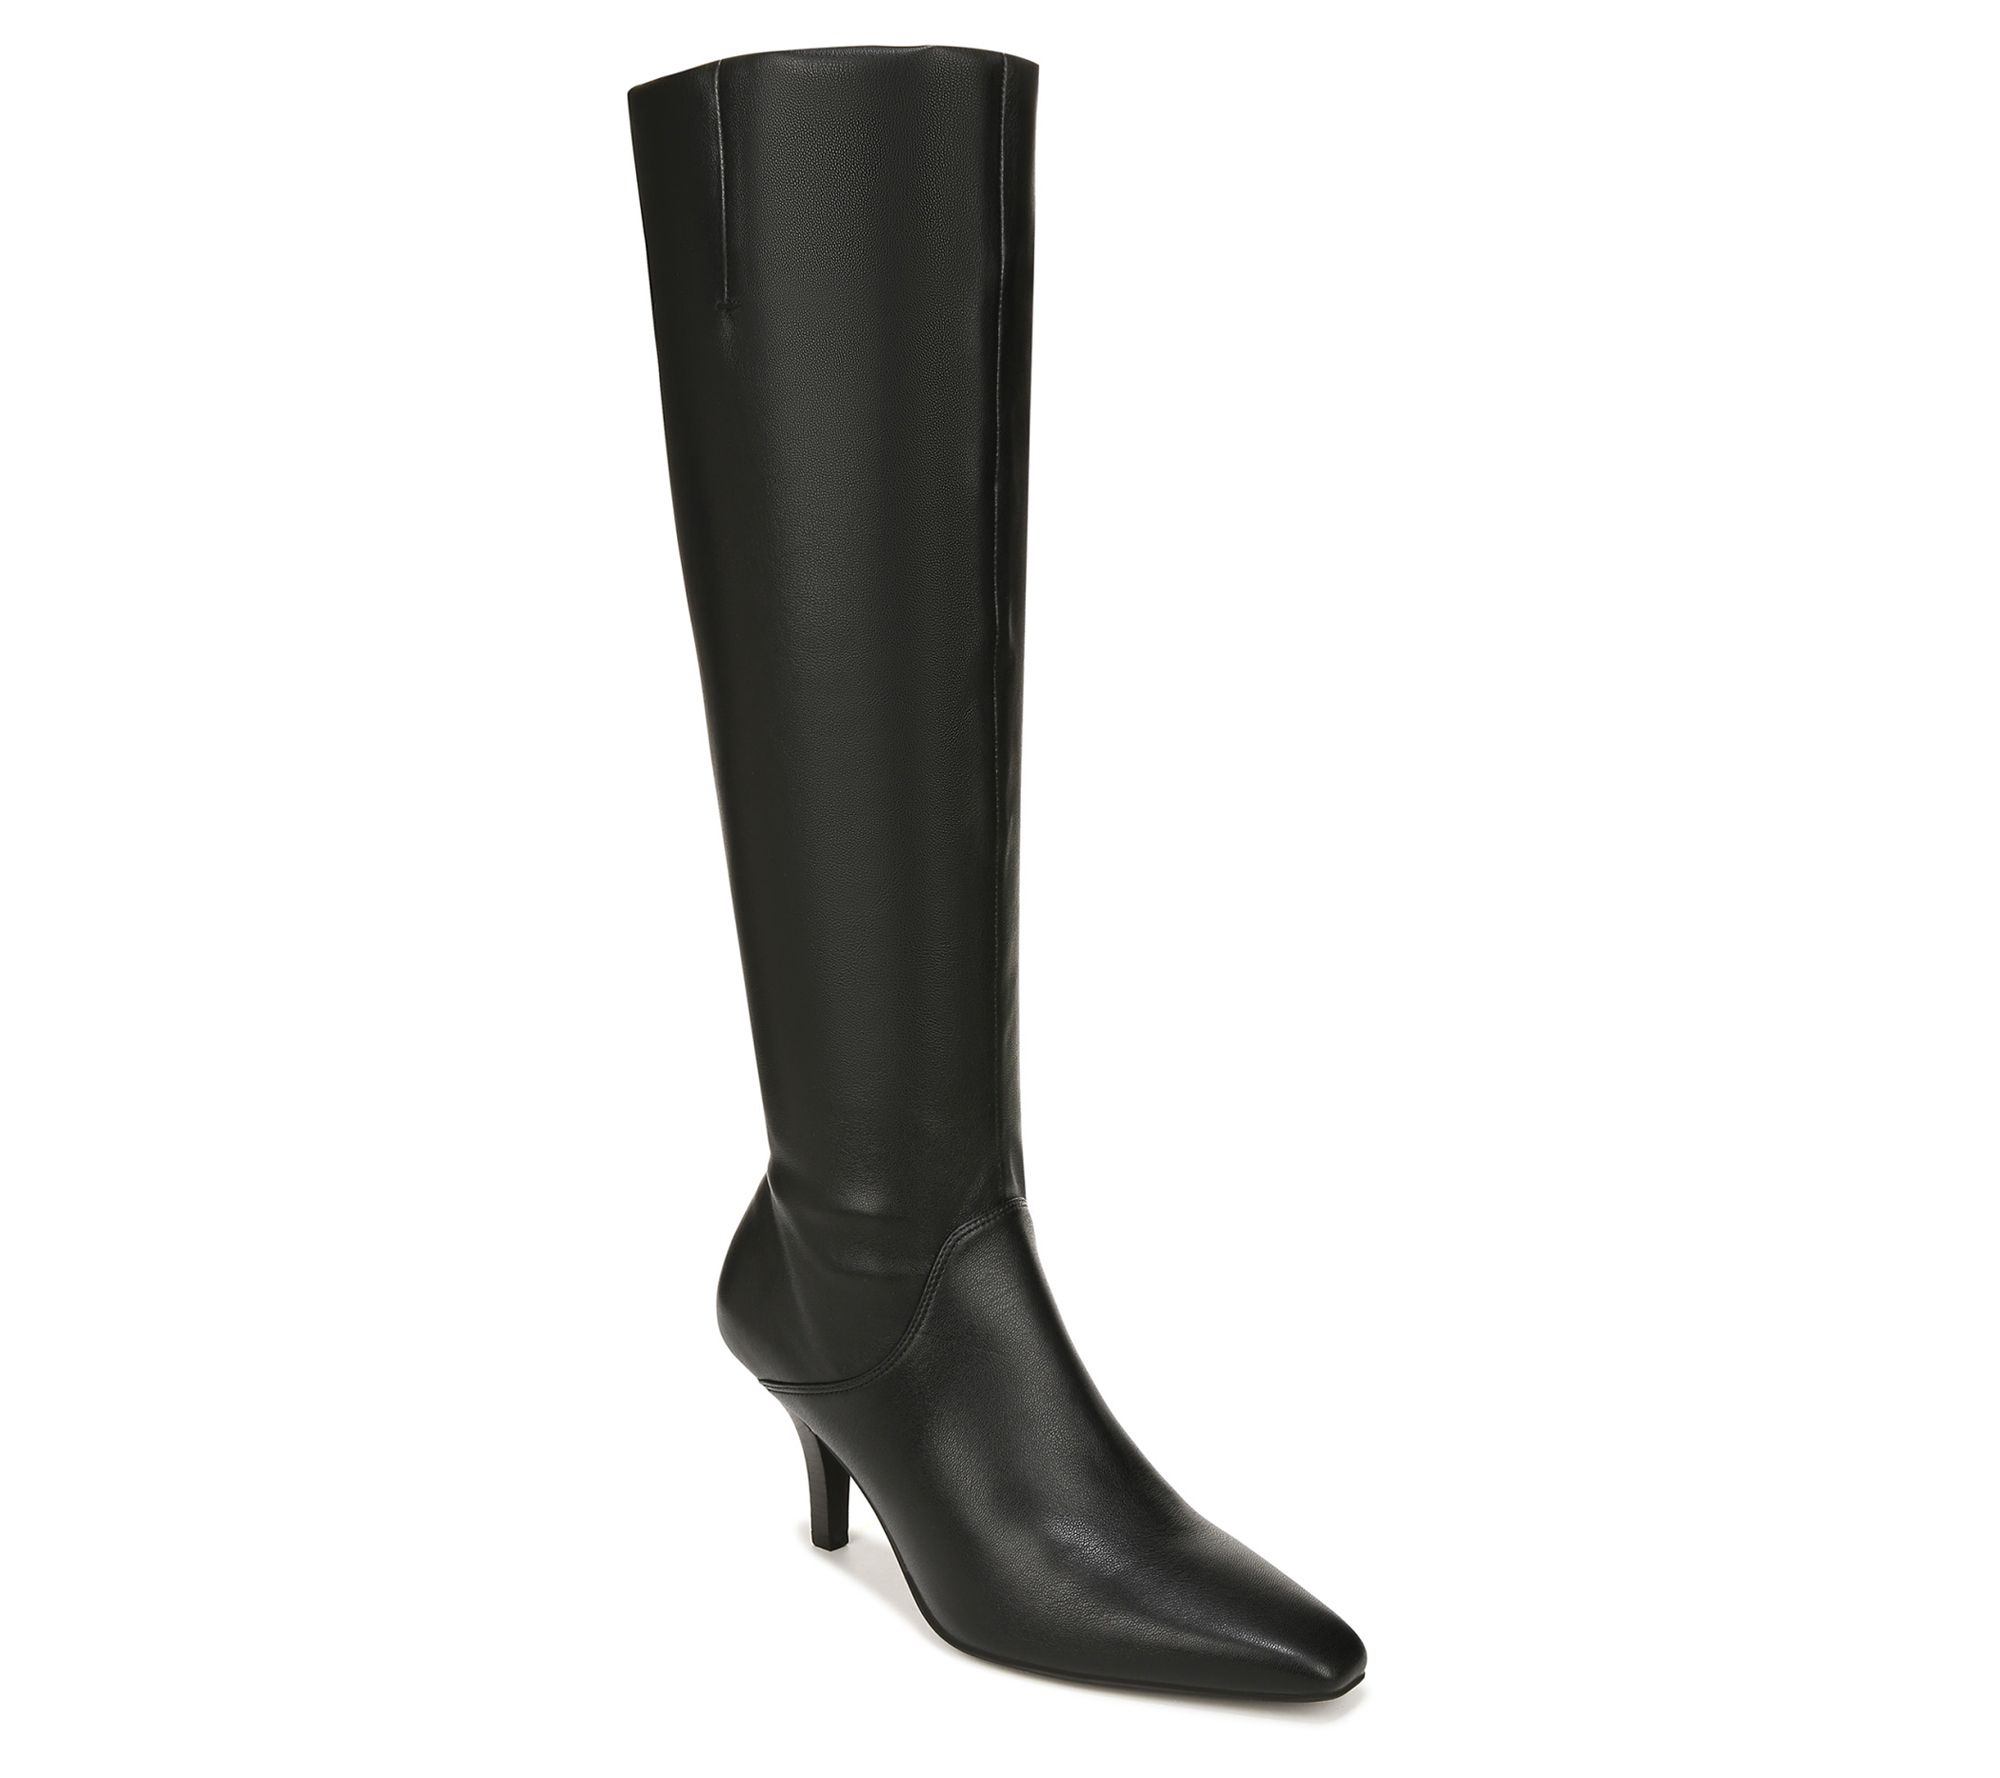 Franco Sarto High-Shaft Boots - Lyla - QVC.com